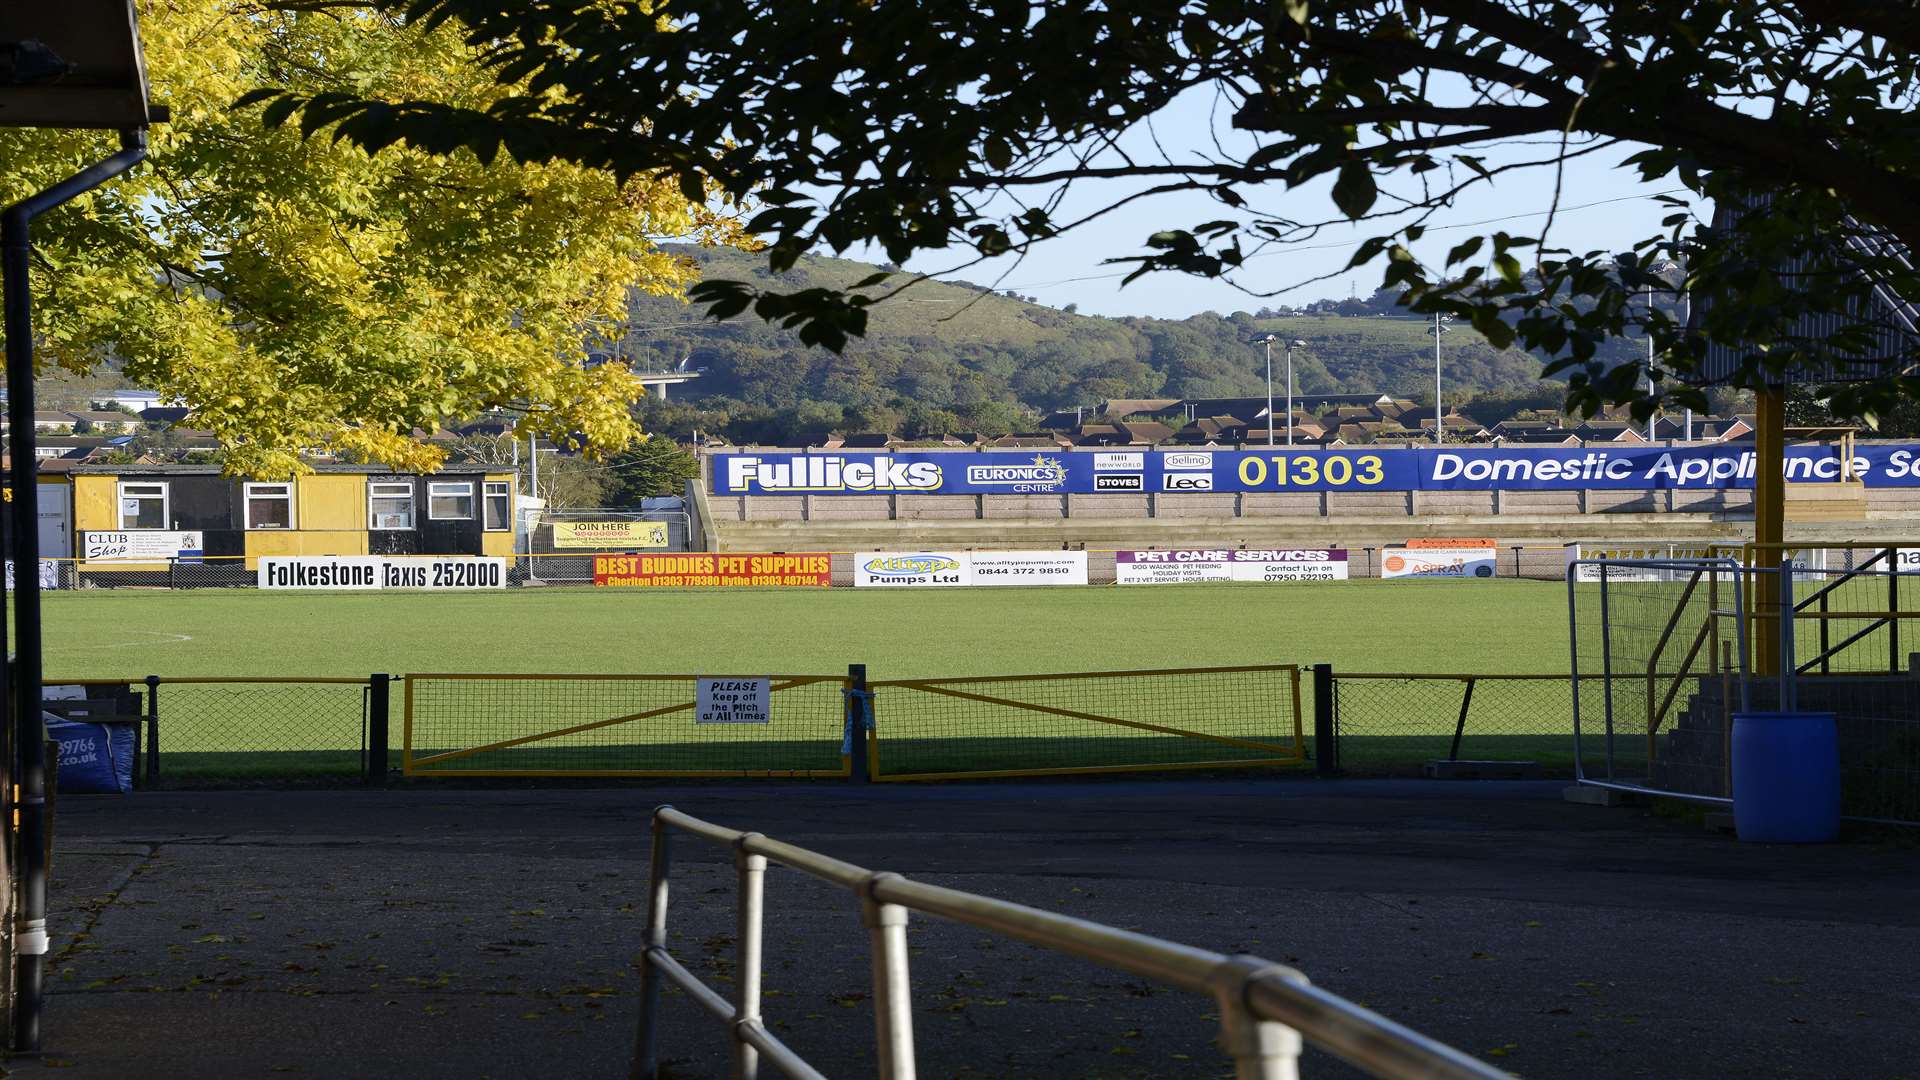 The Fullicks Stadium in Folkestone